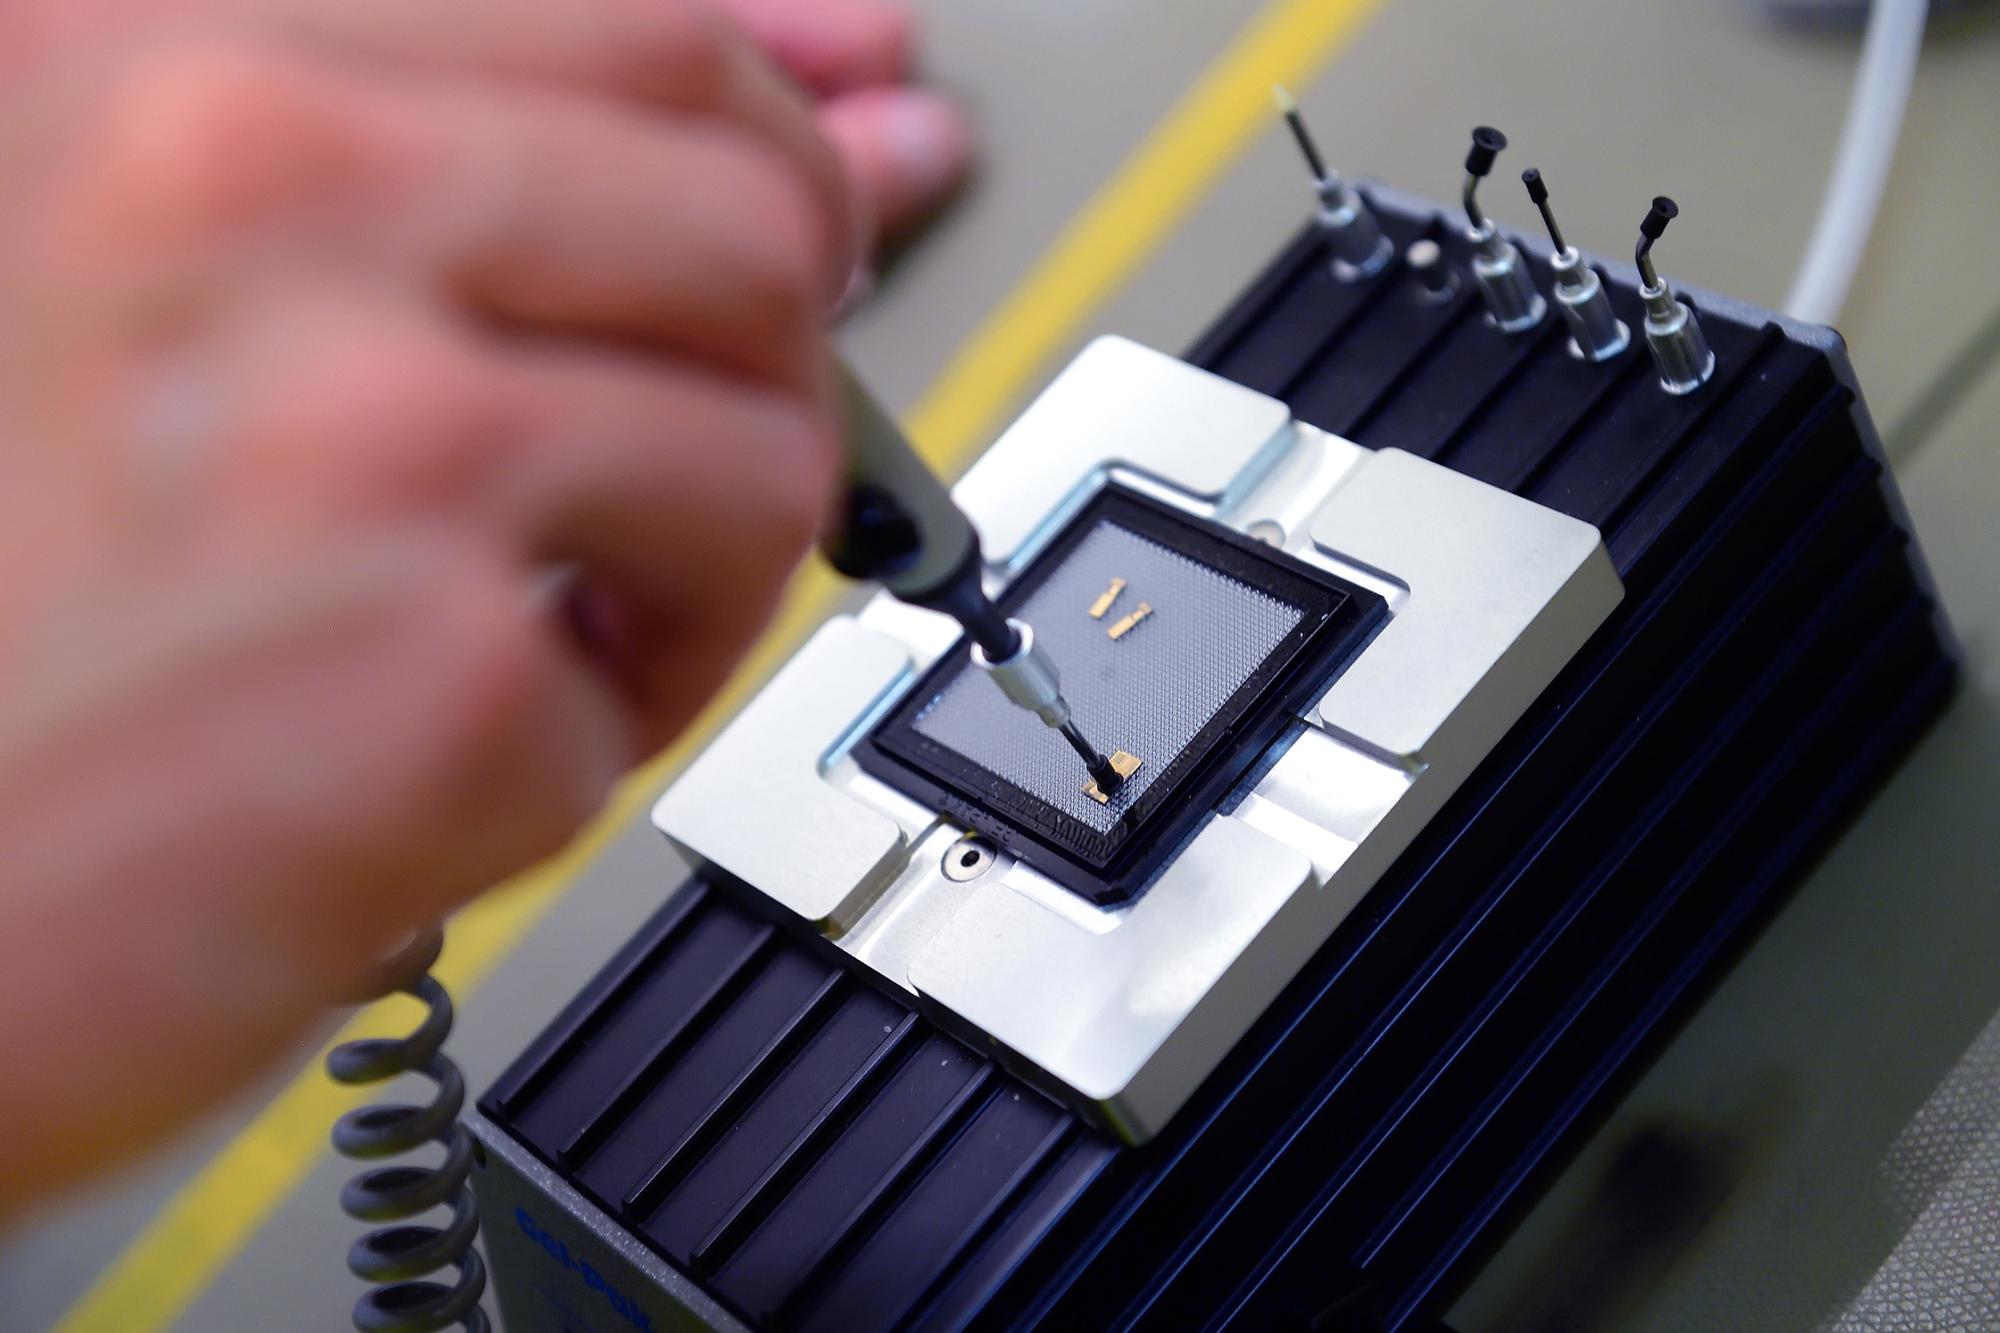 EFFECT Photonics makes Photonic Integrated Circuits